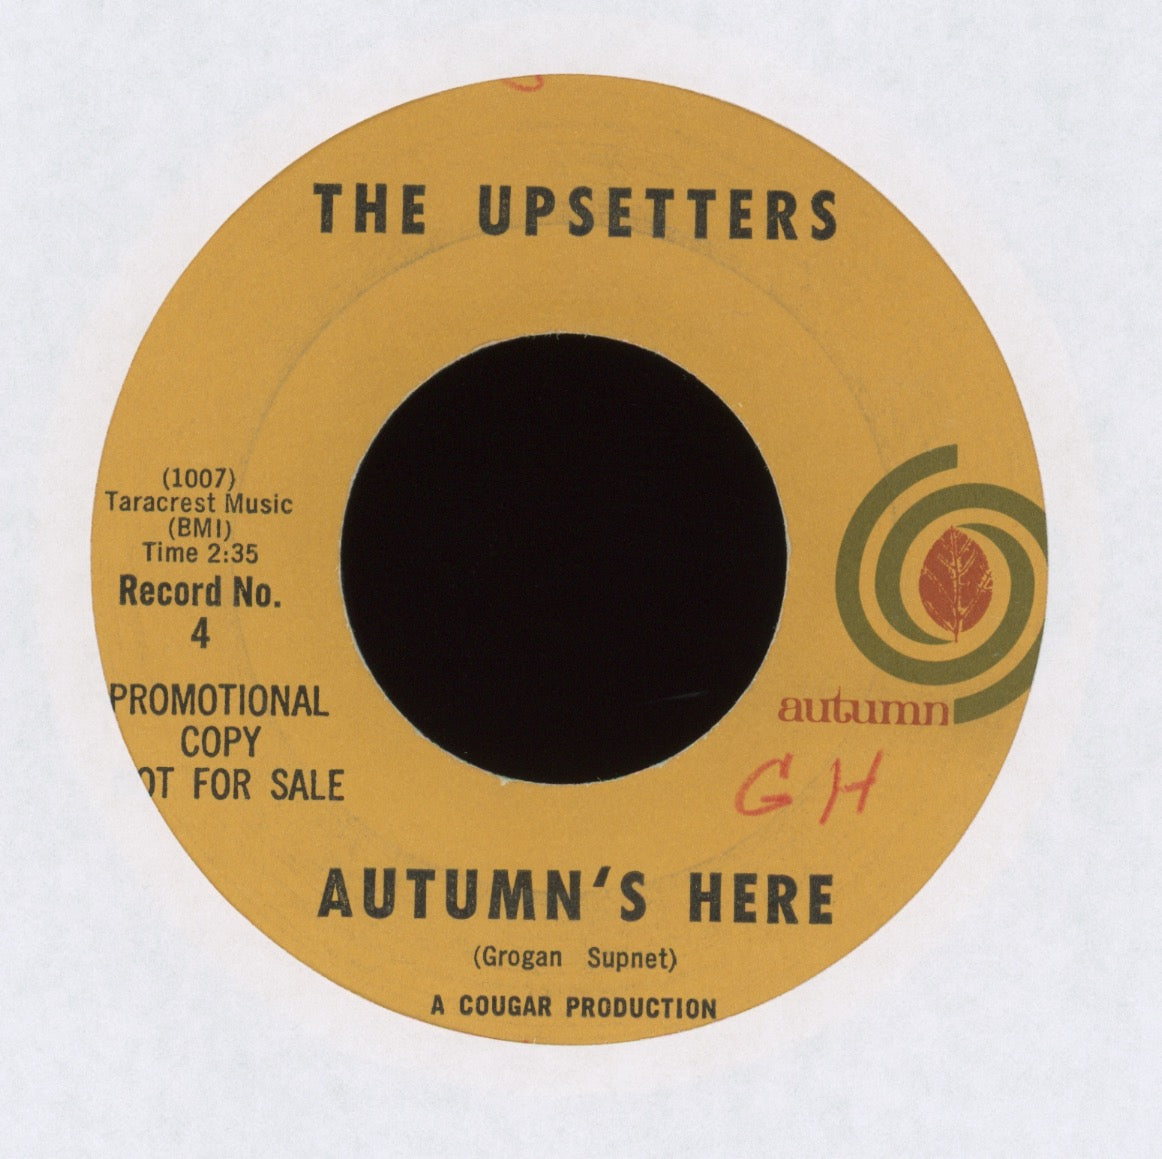 The Upsetters - Draggin' The Main on Autumn Promo